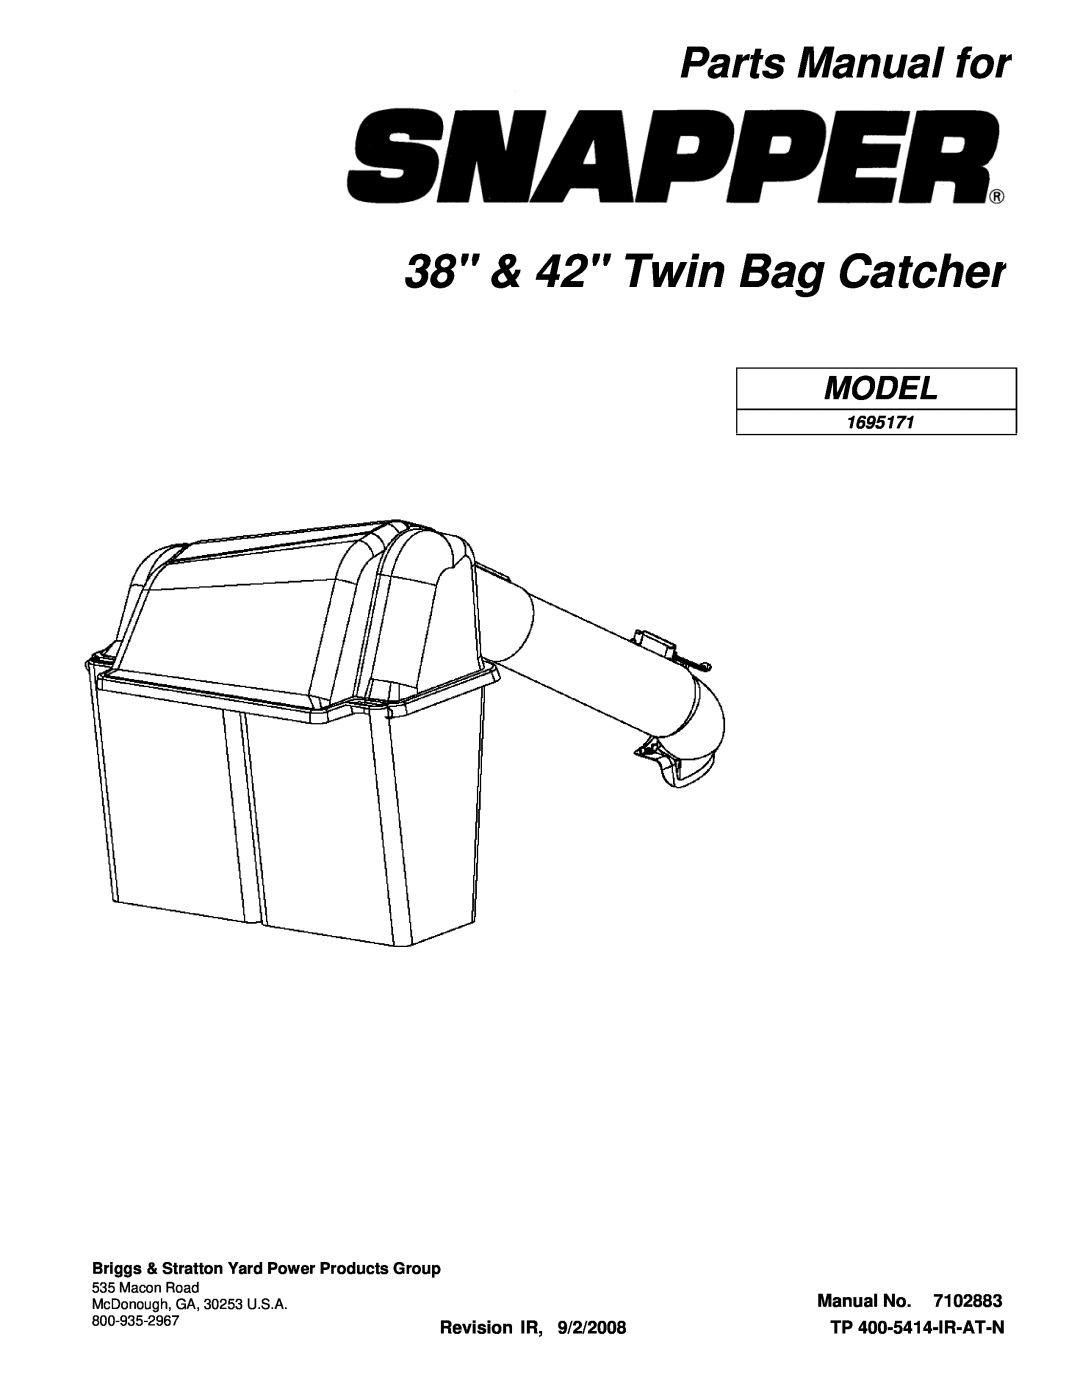 Snapper 1695171 manual Parts Manual for, Manual No, Revision IR, 9/2/2008, TP 400-5414-IR-AT-N, 38 & 42 Twin Bag Catcher 